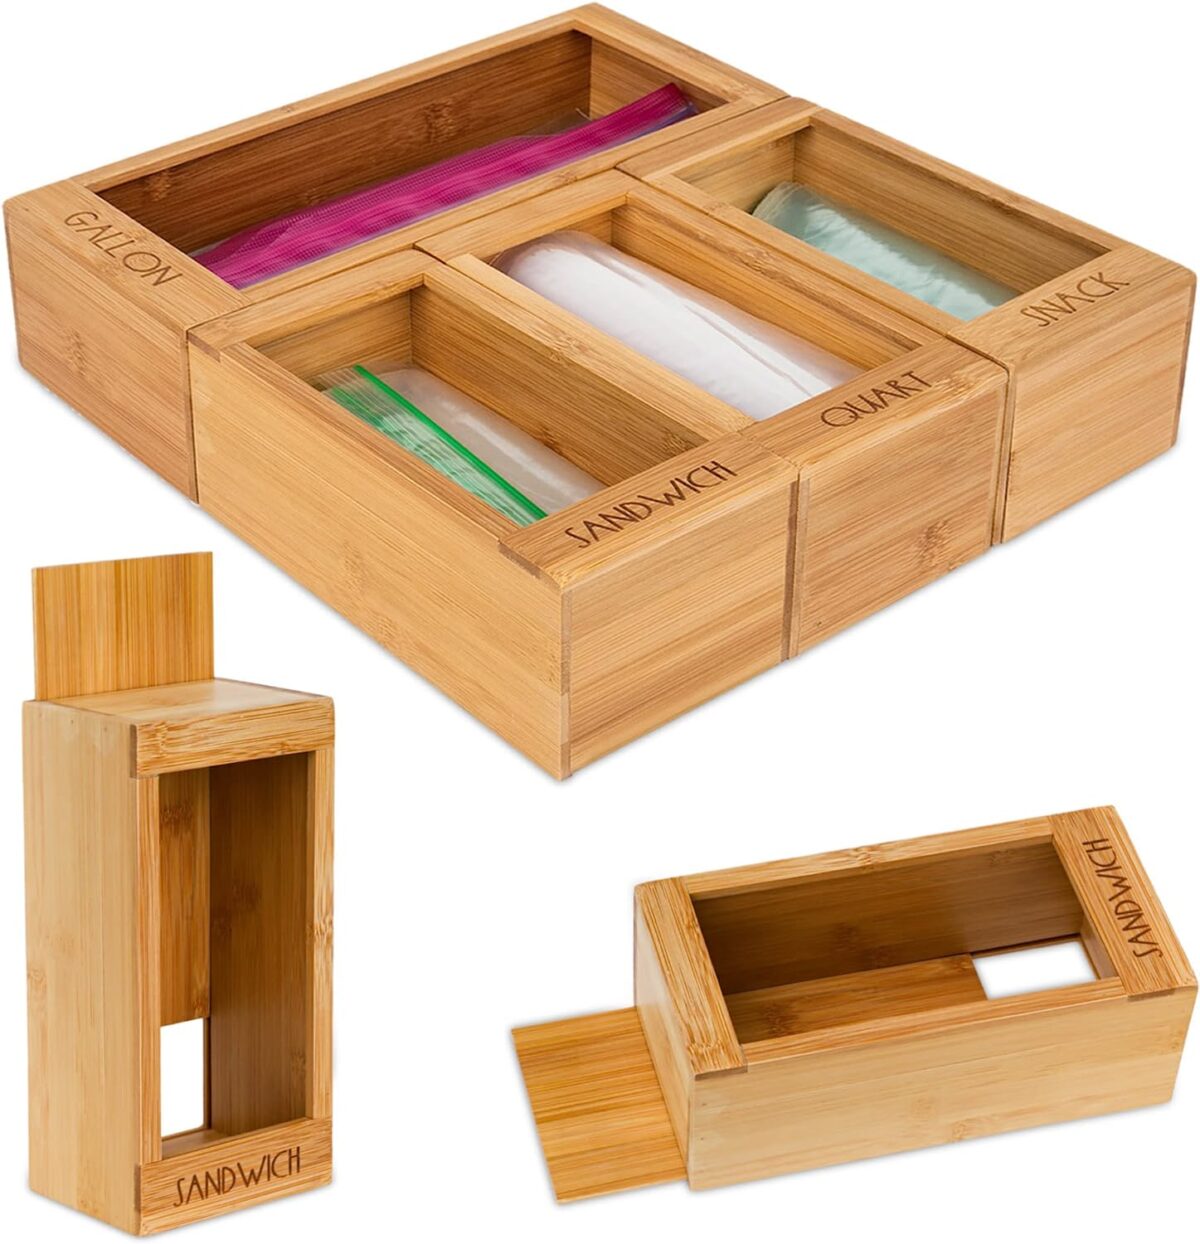 Bamboo Ziplock Bag Storage Organizer and Dispenser purplewares for